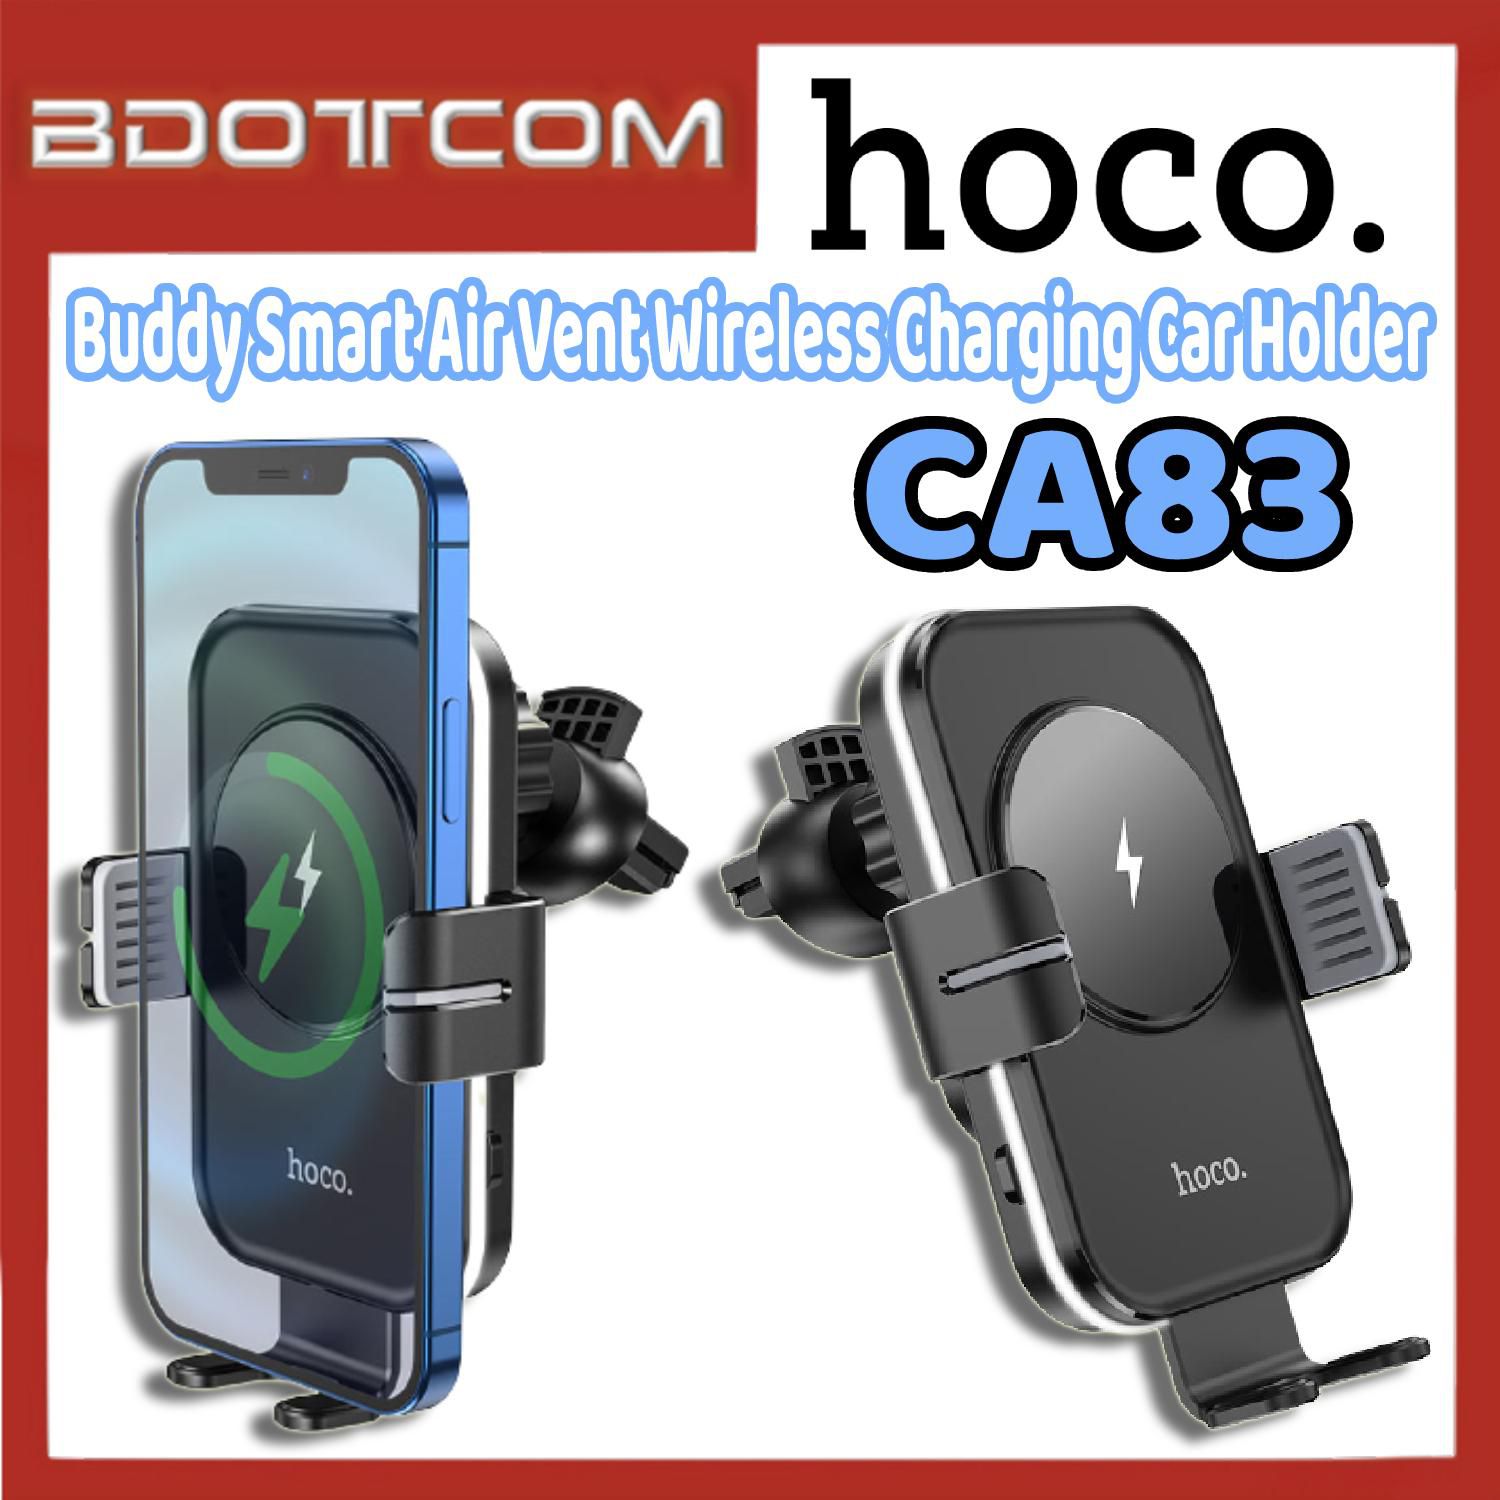 Hoco CA80 Buddy Smart Air Vent Wireless Charging Car Mount Phone Holder